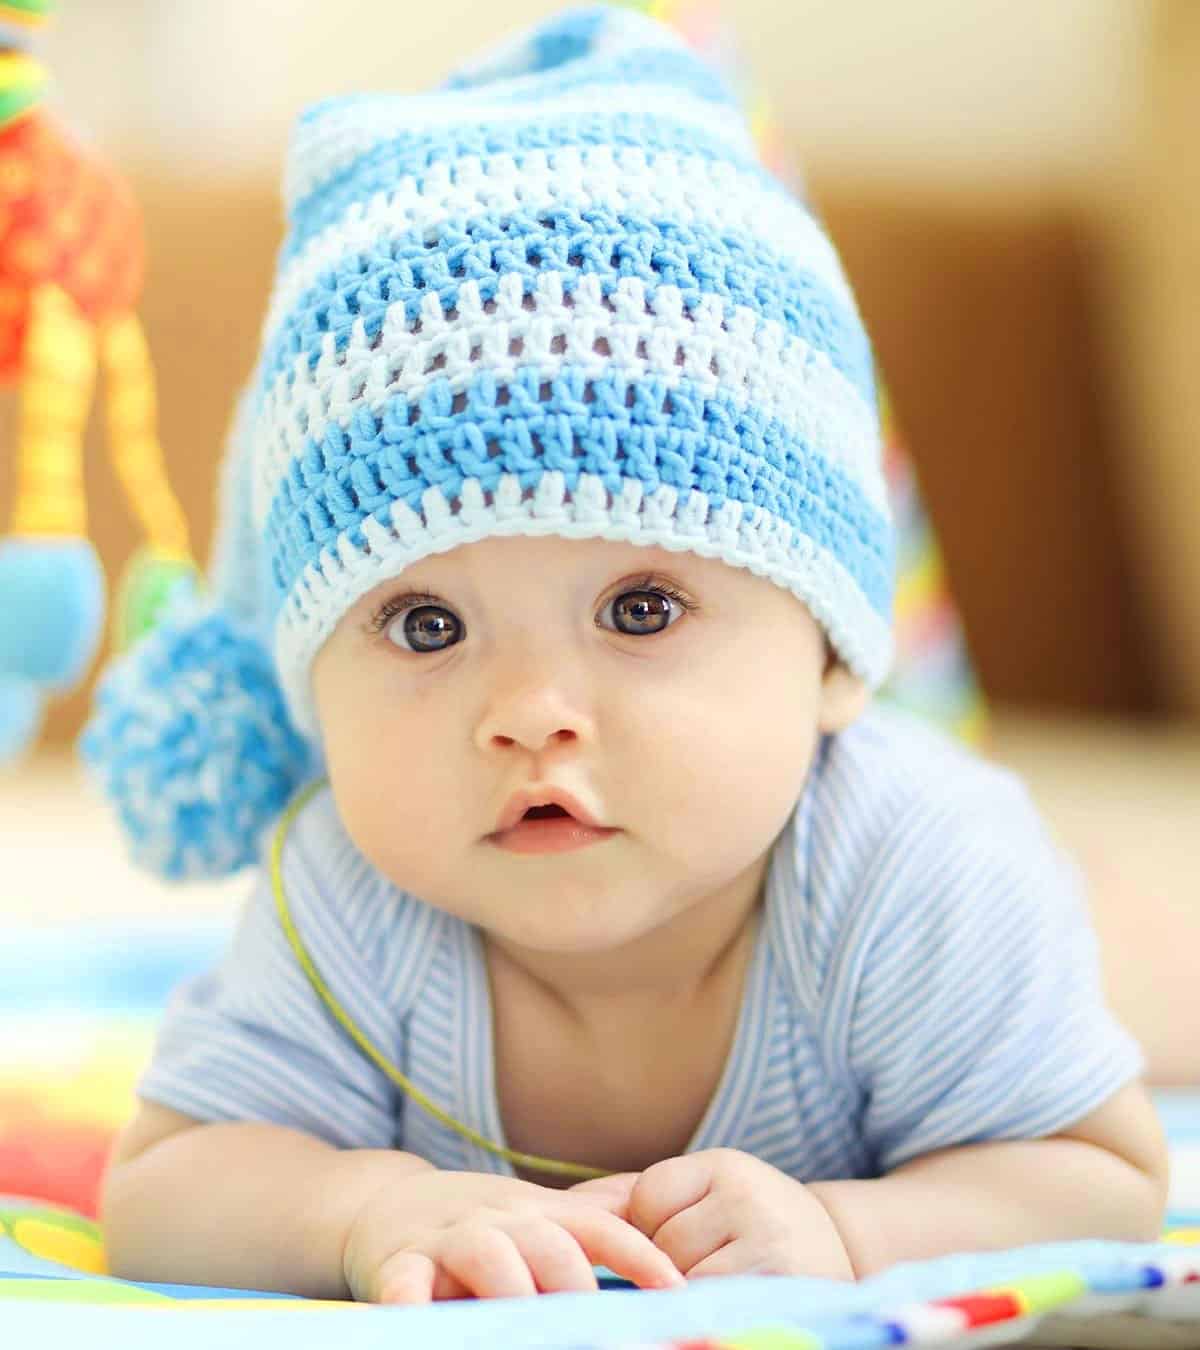 110+] Cute Baby DP, Pic, Photos for Whatsapp & Instagram (HD)